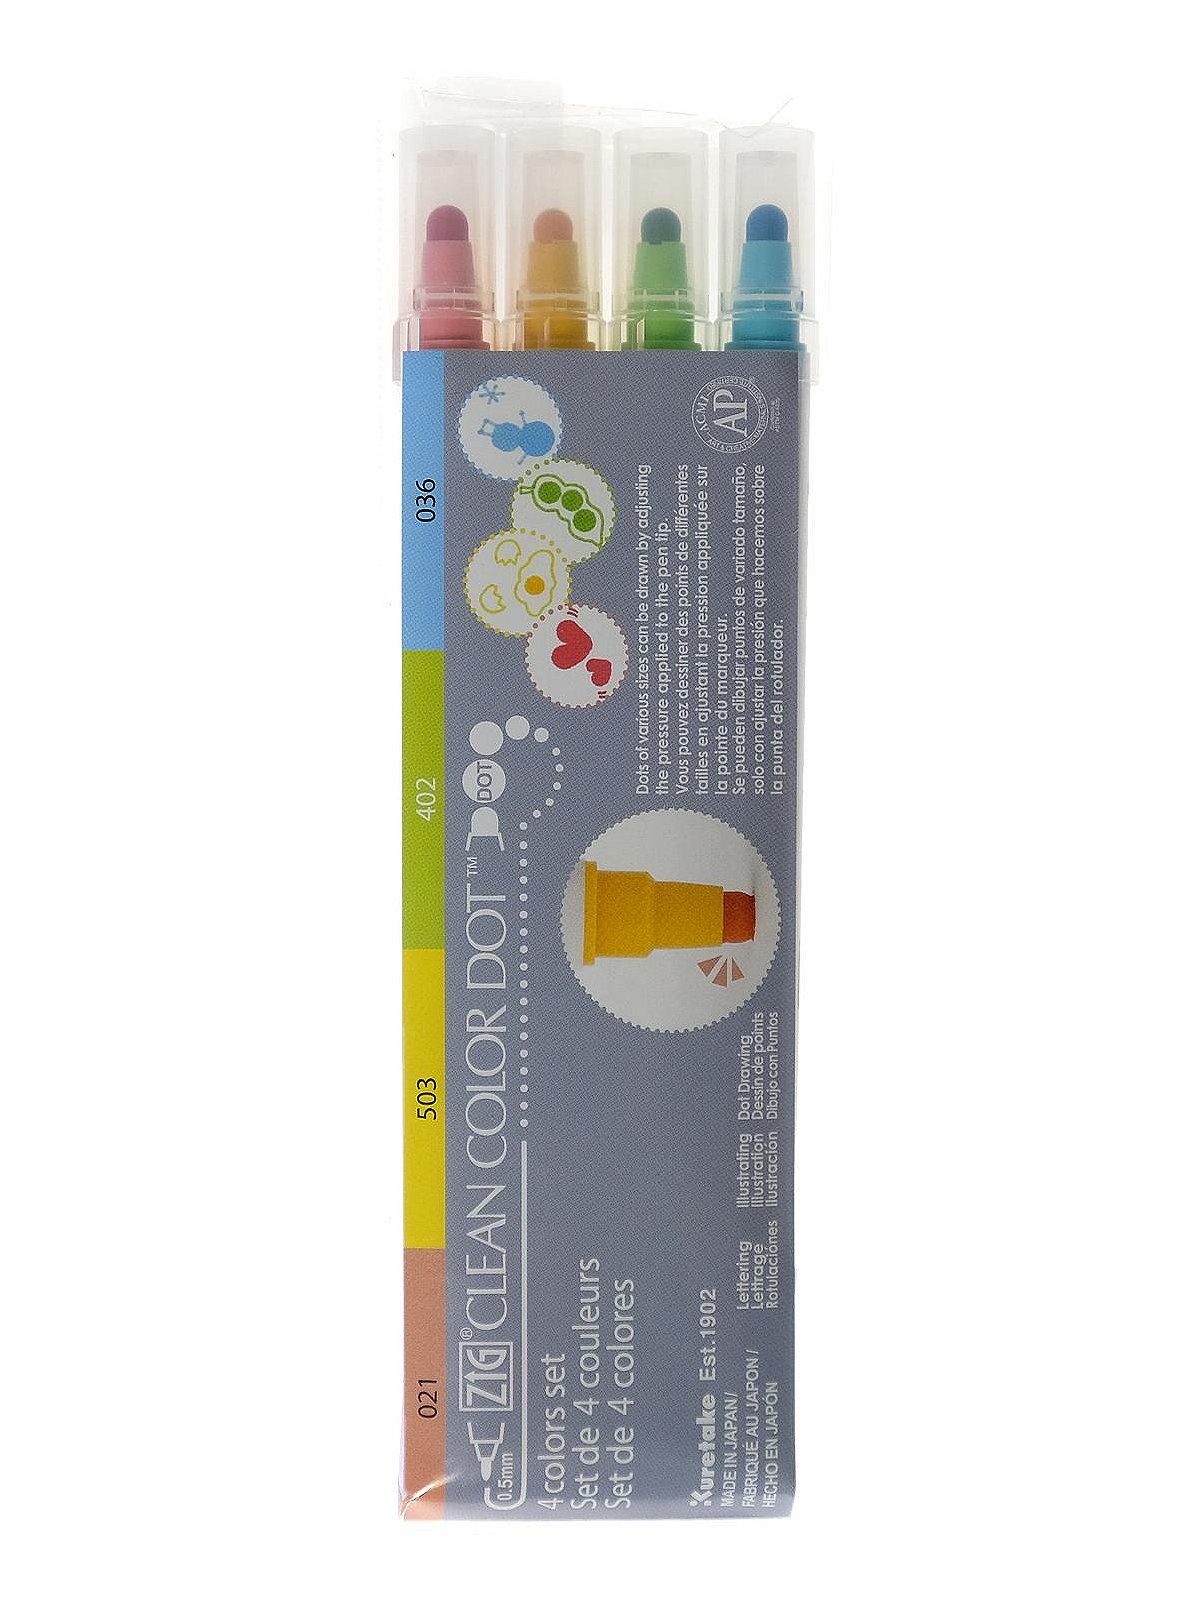  Kuretake ZIG Clean Color DOT markers 4 colors set